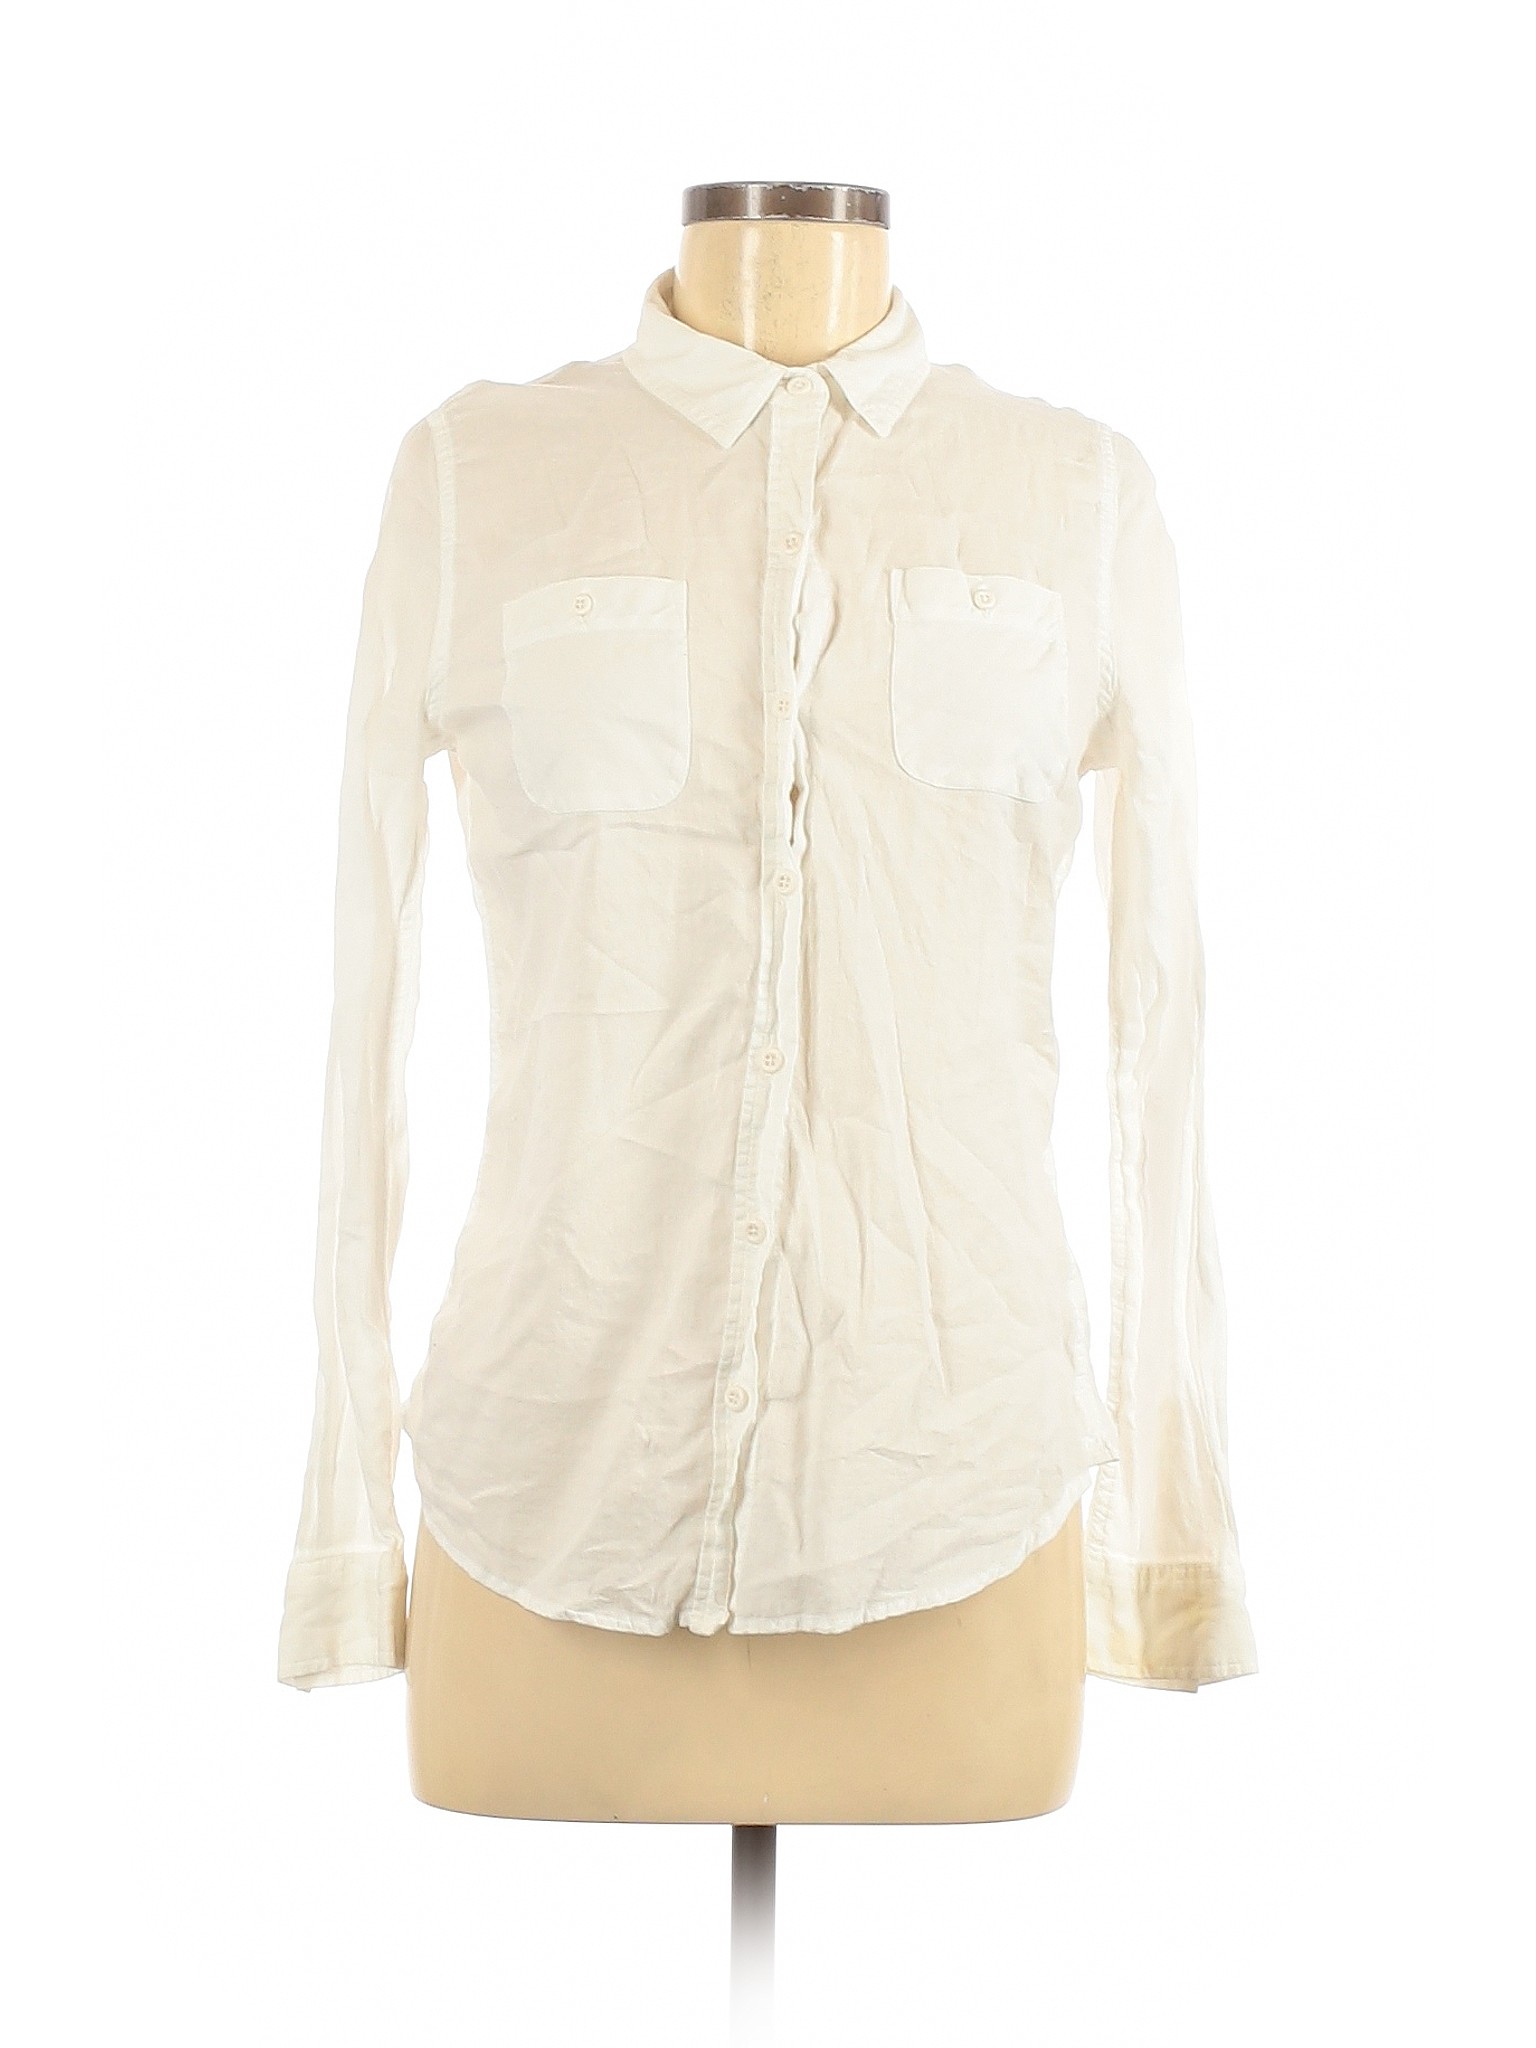 Mossimo Supply Co. Women White Long Sleeve Blouse M | eBay